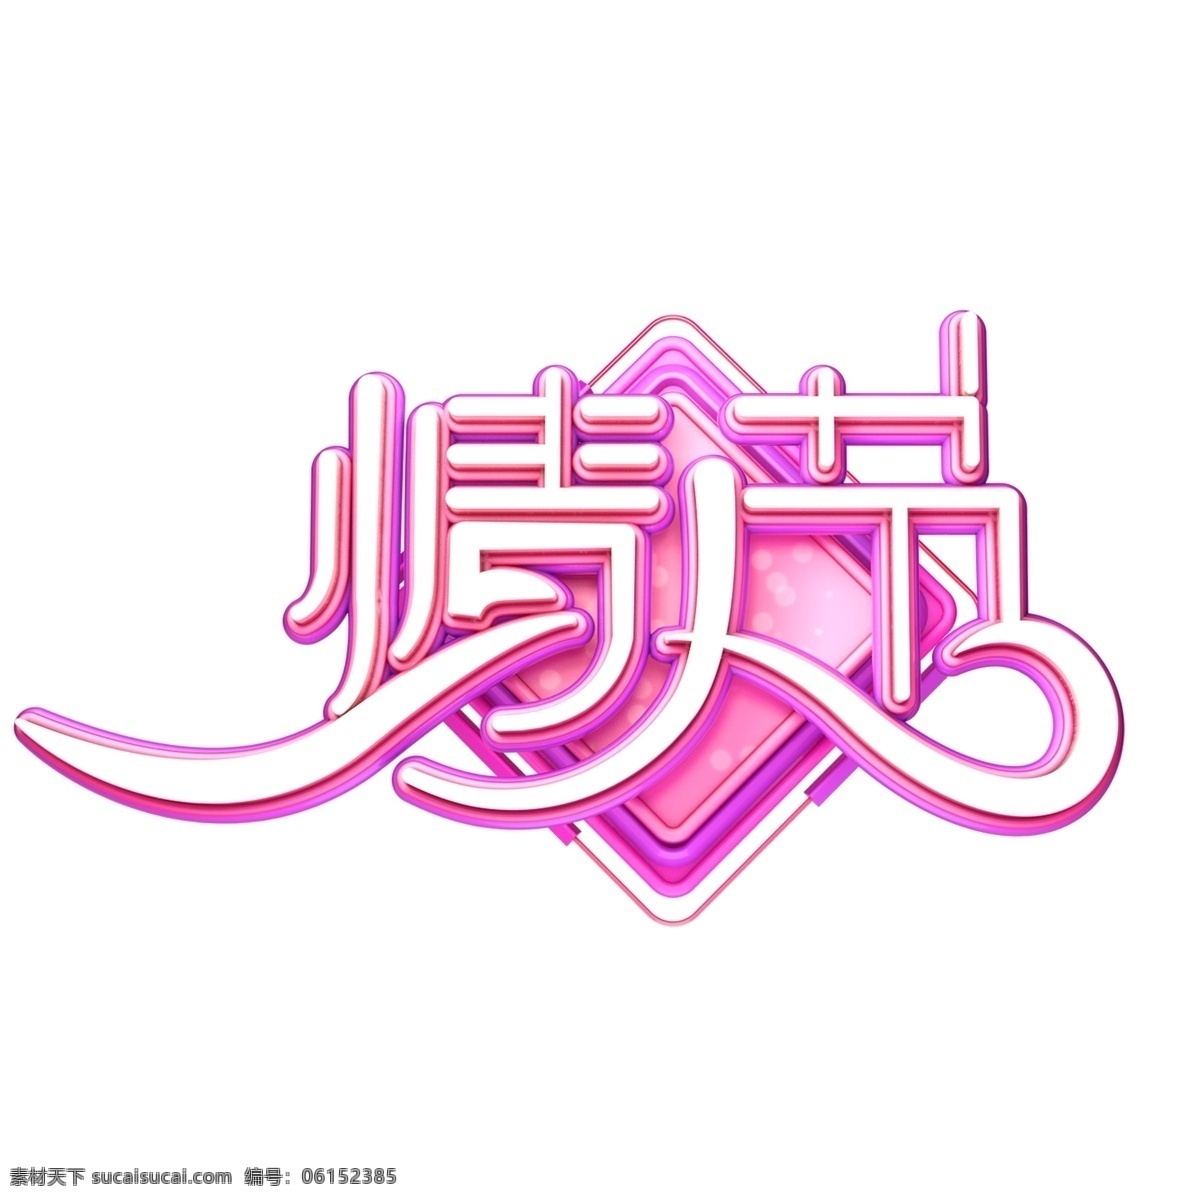 c4d 艺术 字 情人节 粉色 字体 元素 海报字体 艺术字 2月14日